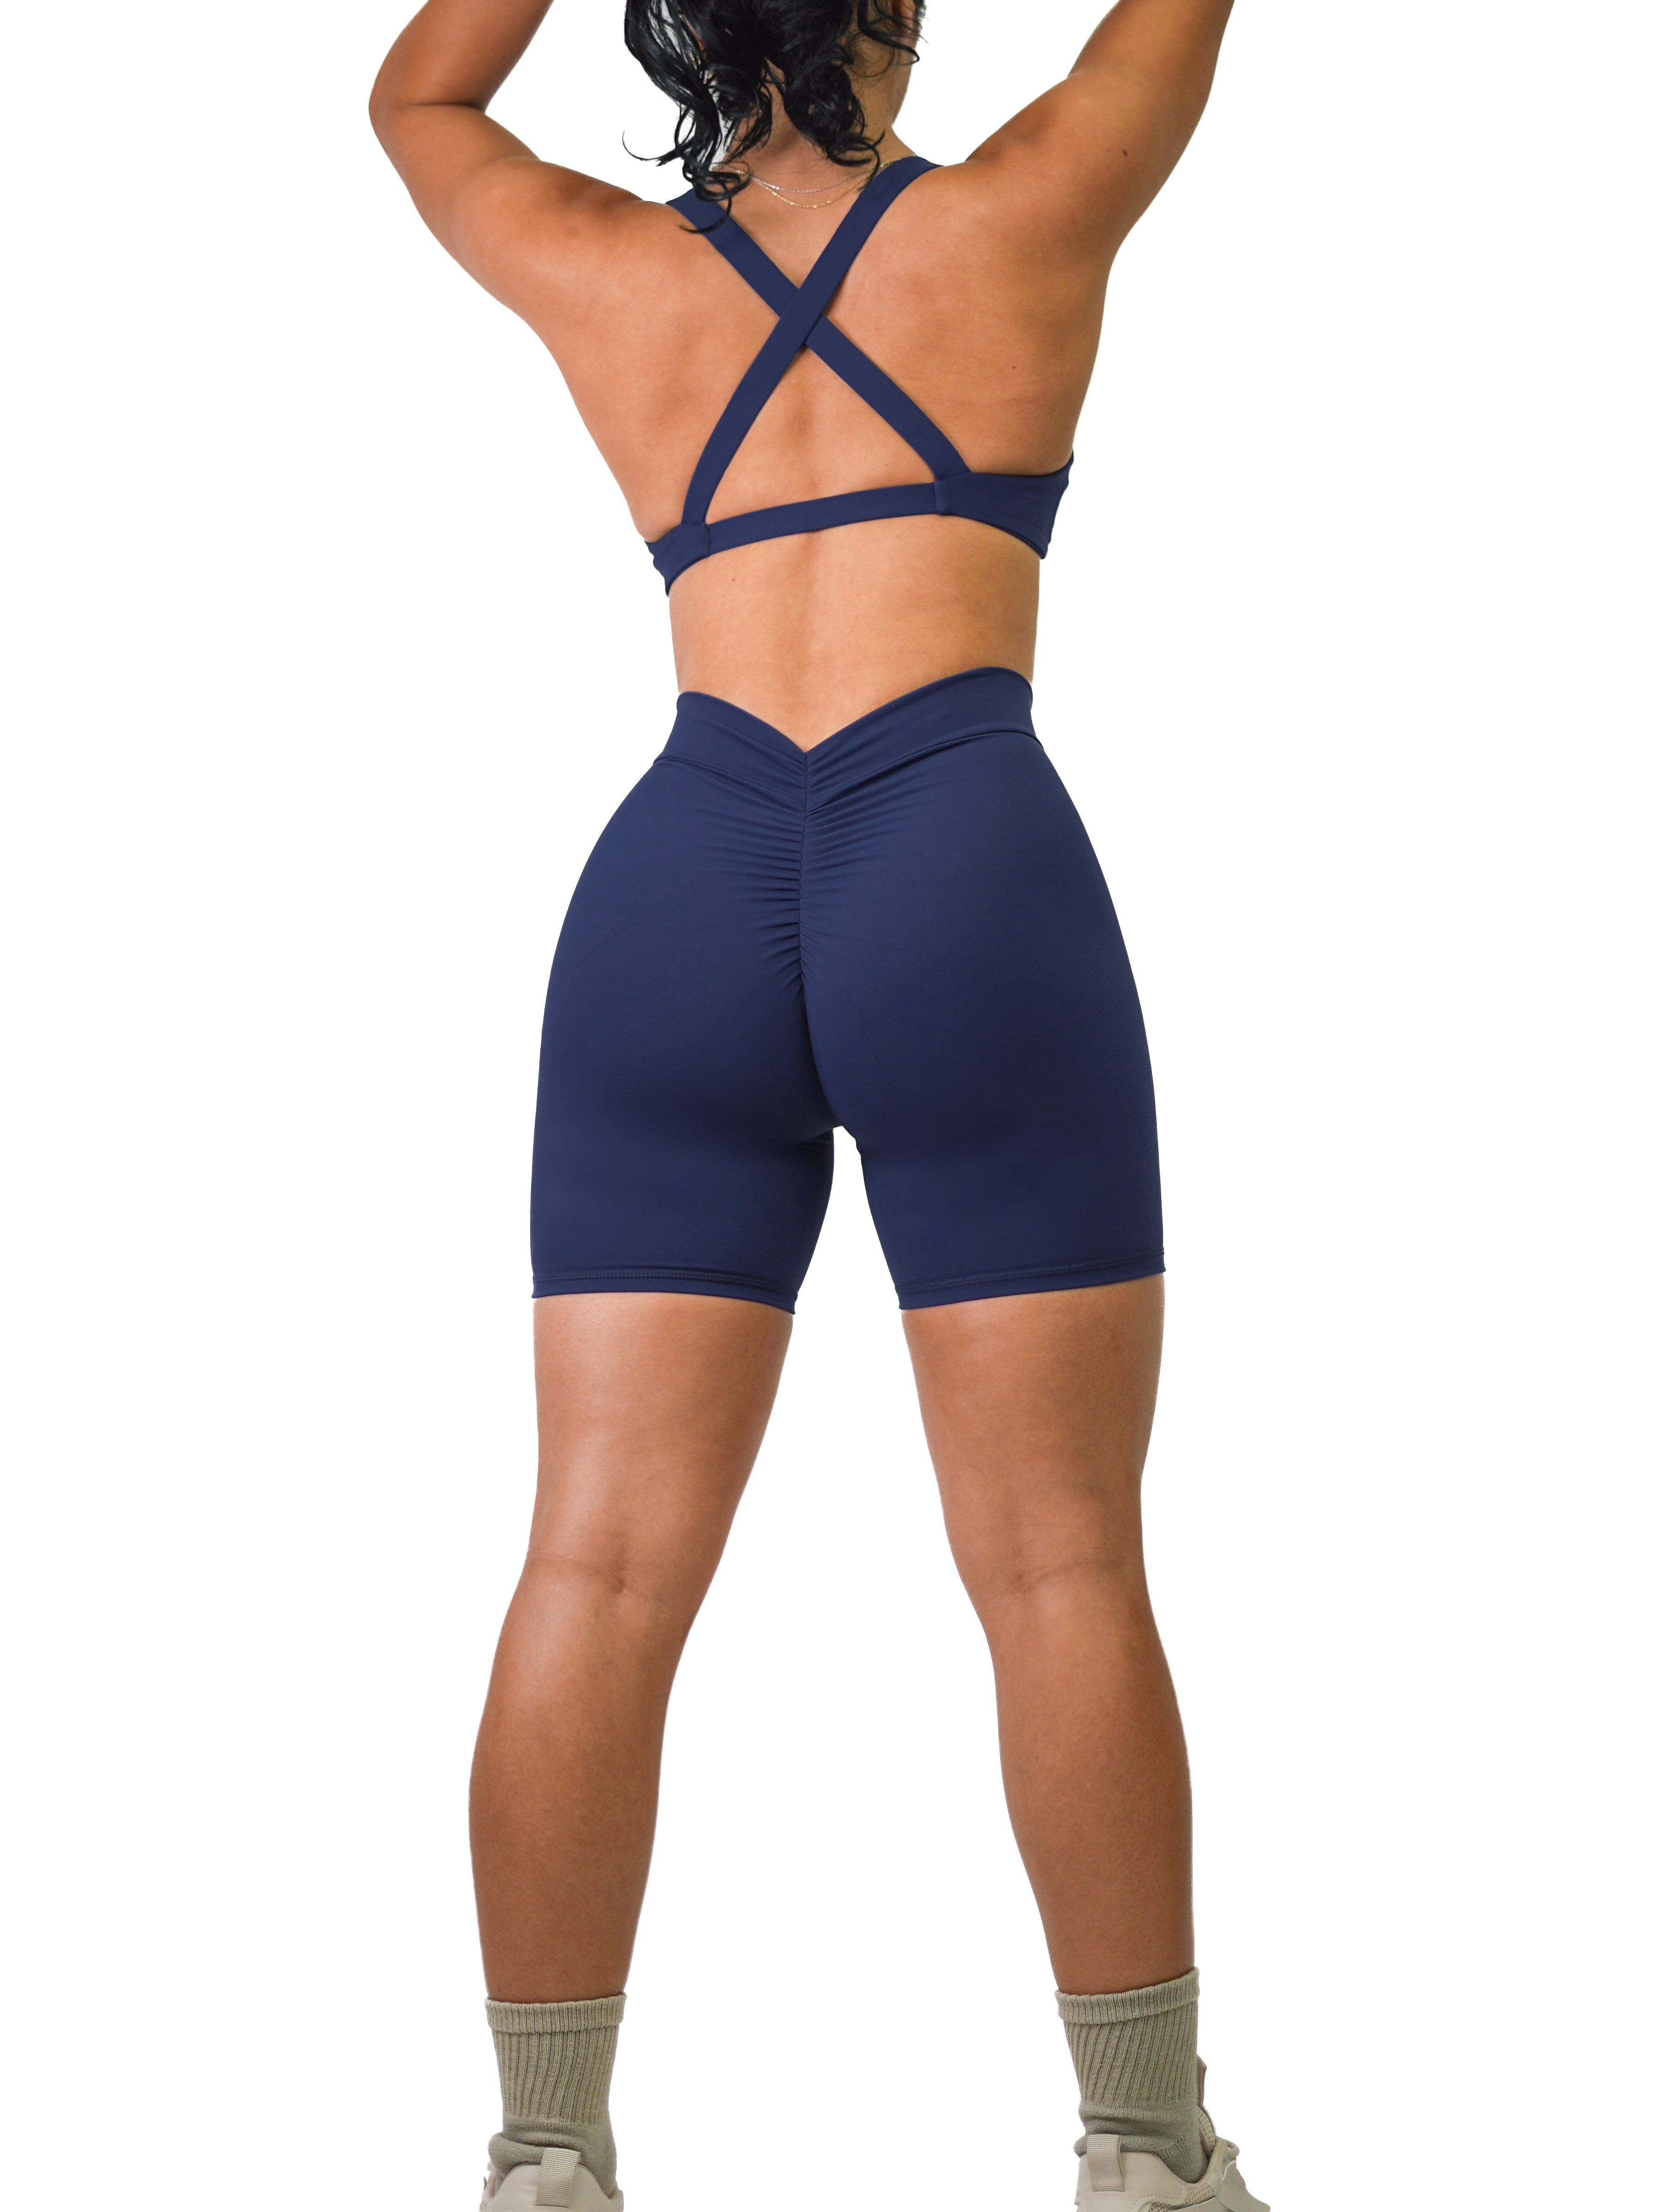 V Back Scrunch Shorts (Navy Blue)